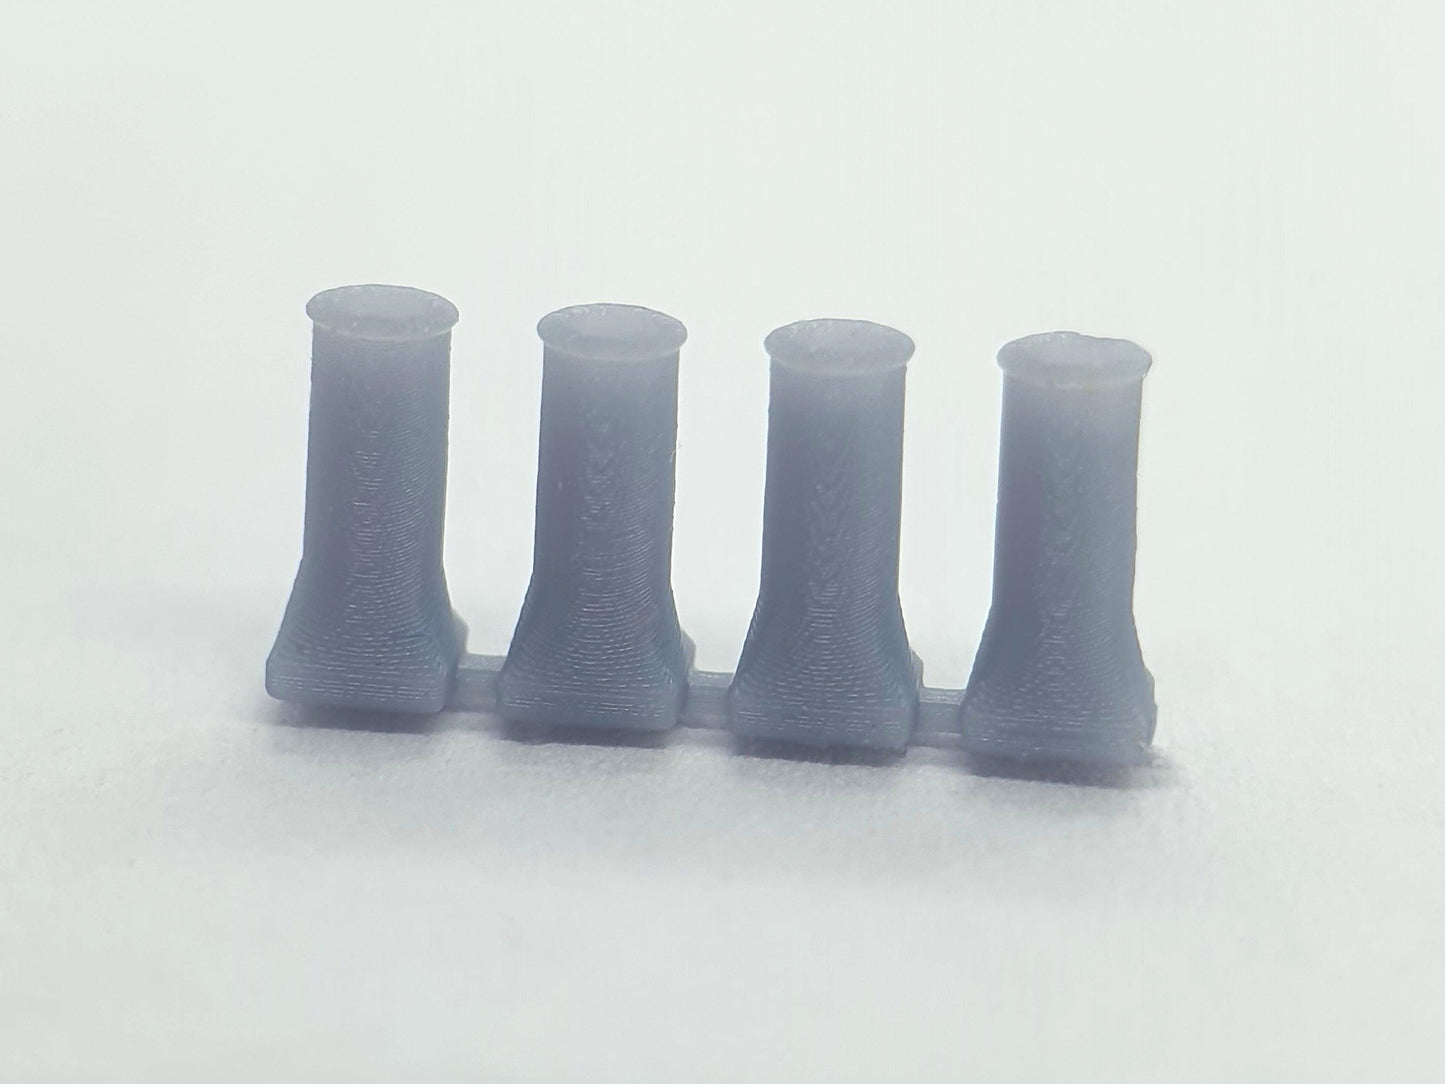 N gauge, 2mm, scale model square base round chimney pots - Three Peaks Models